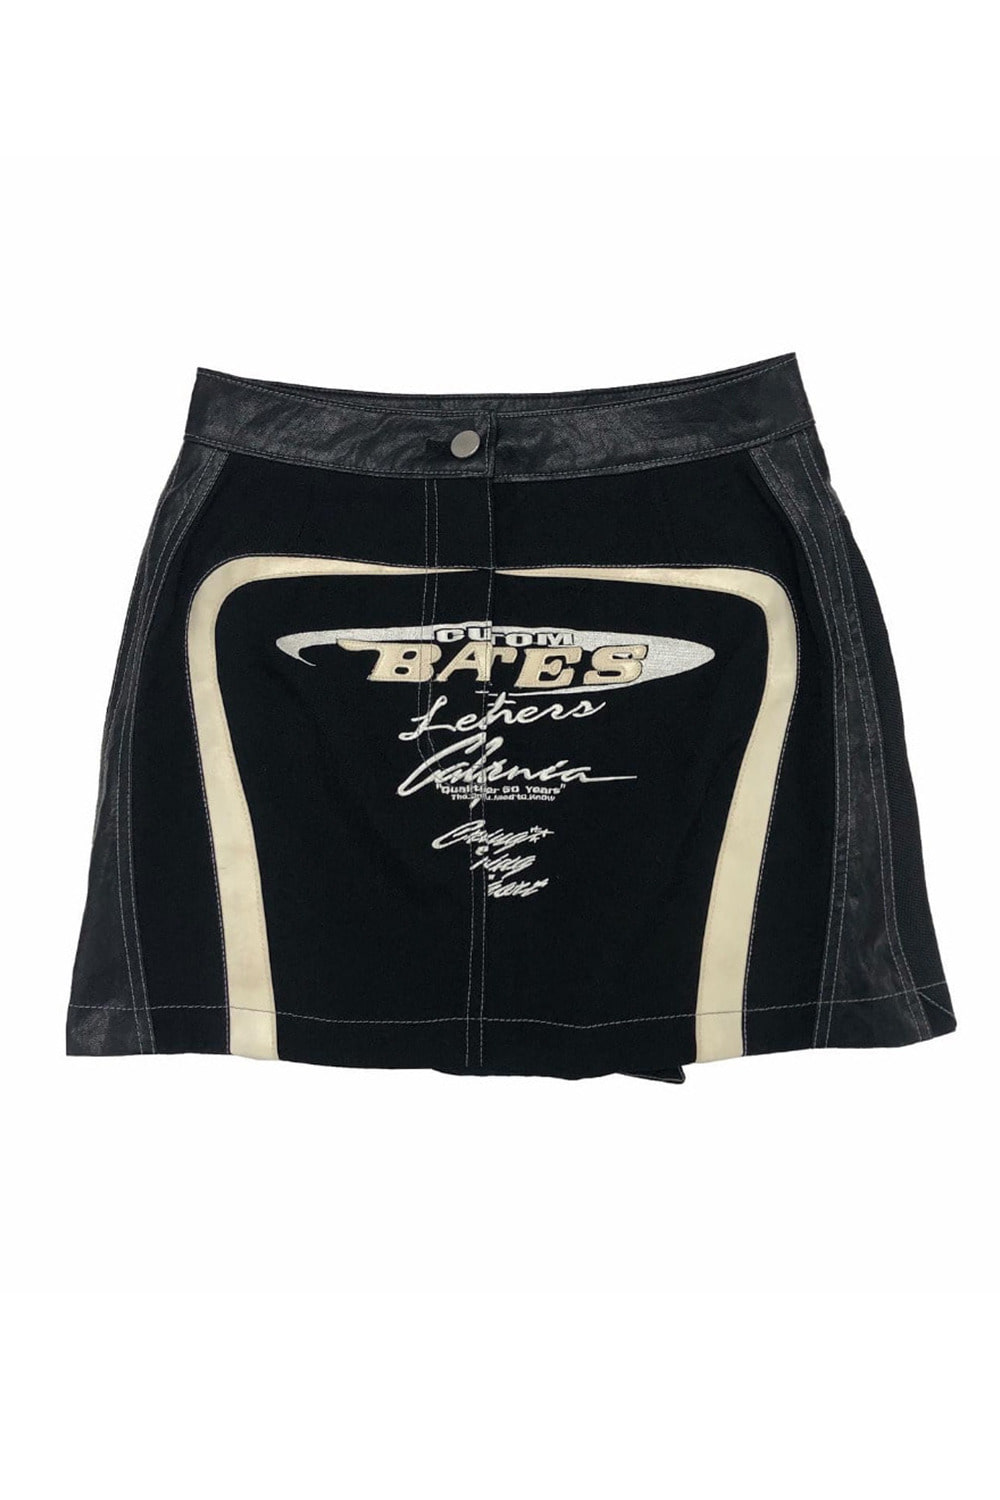 Bates racing jk details skirt (2022)